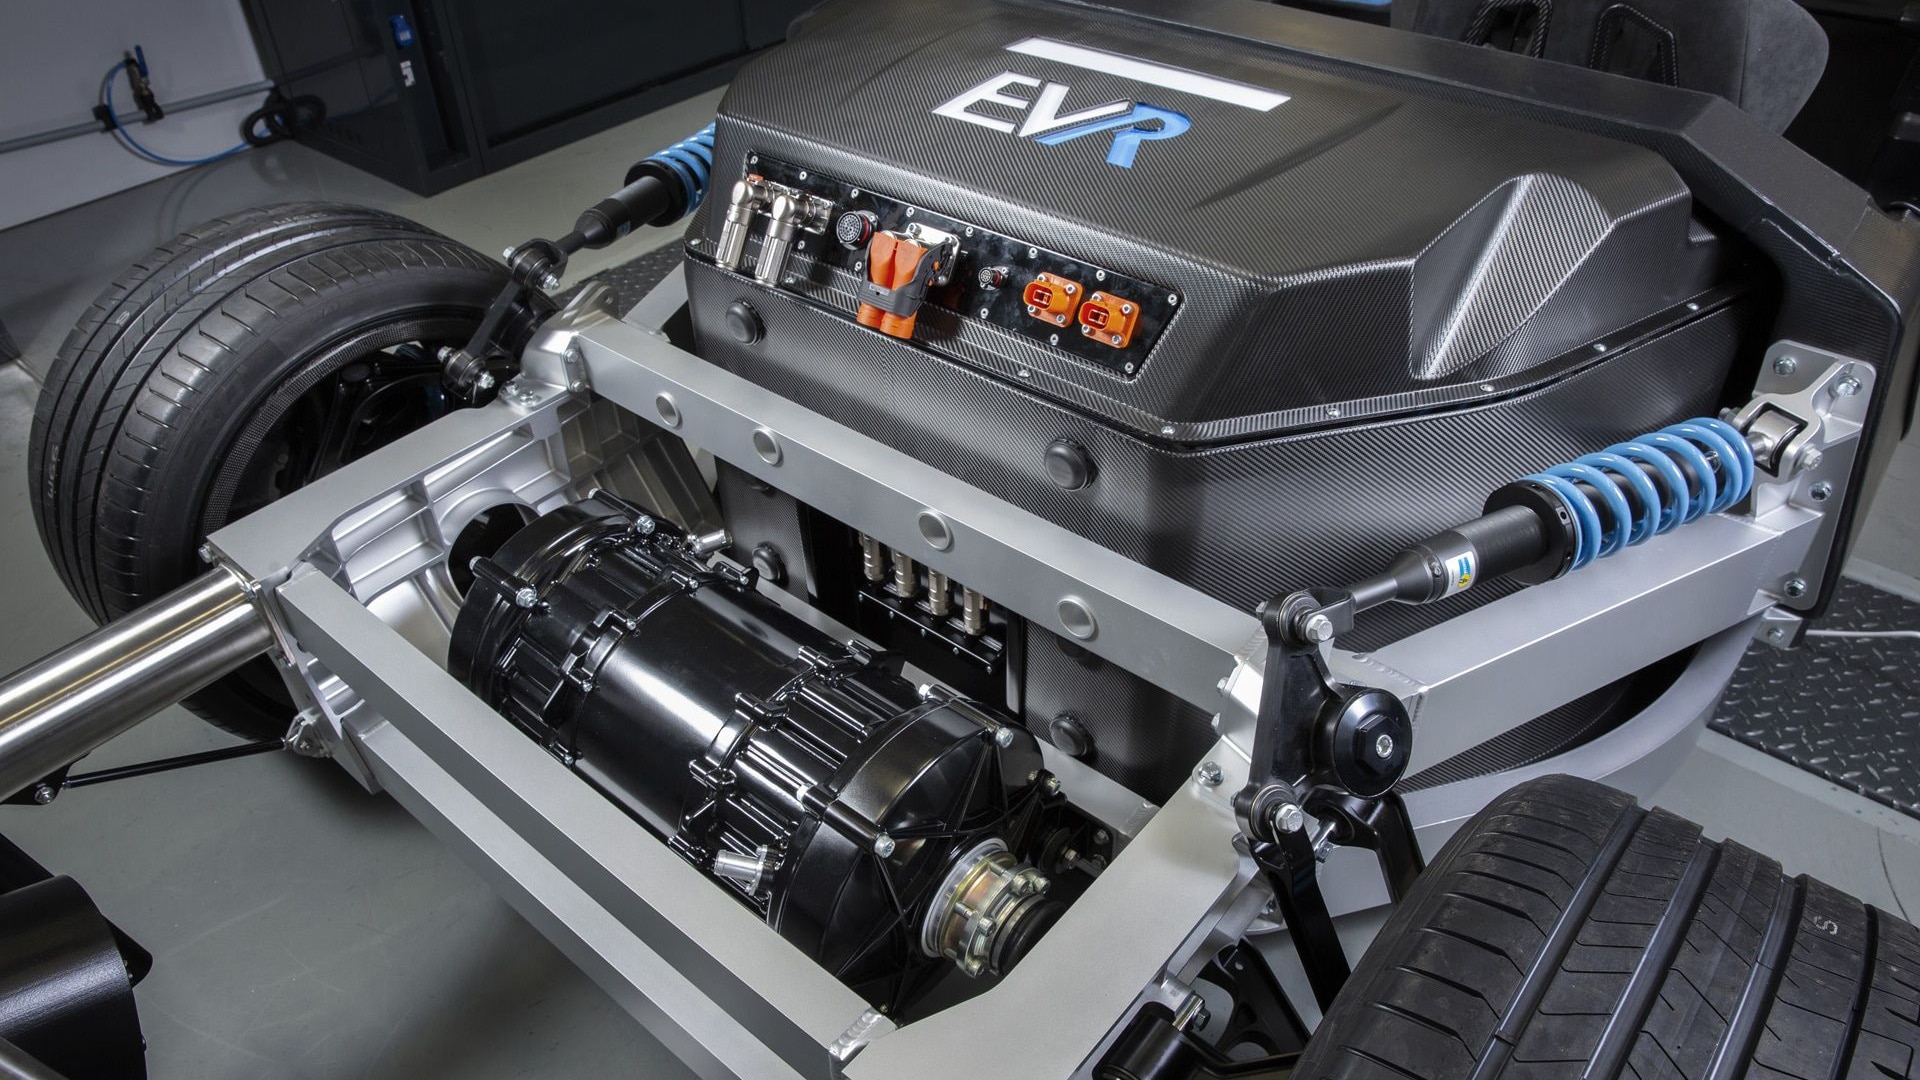 Williams Advanced Engineering EVR modular electric vehicle platform